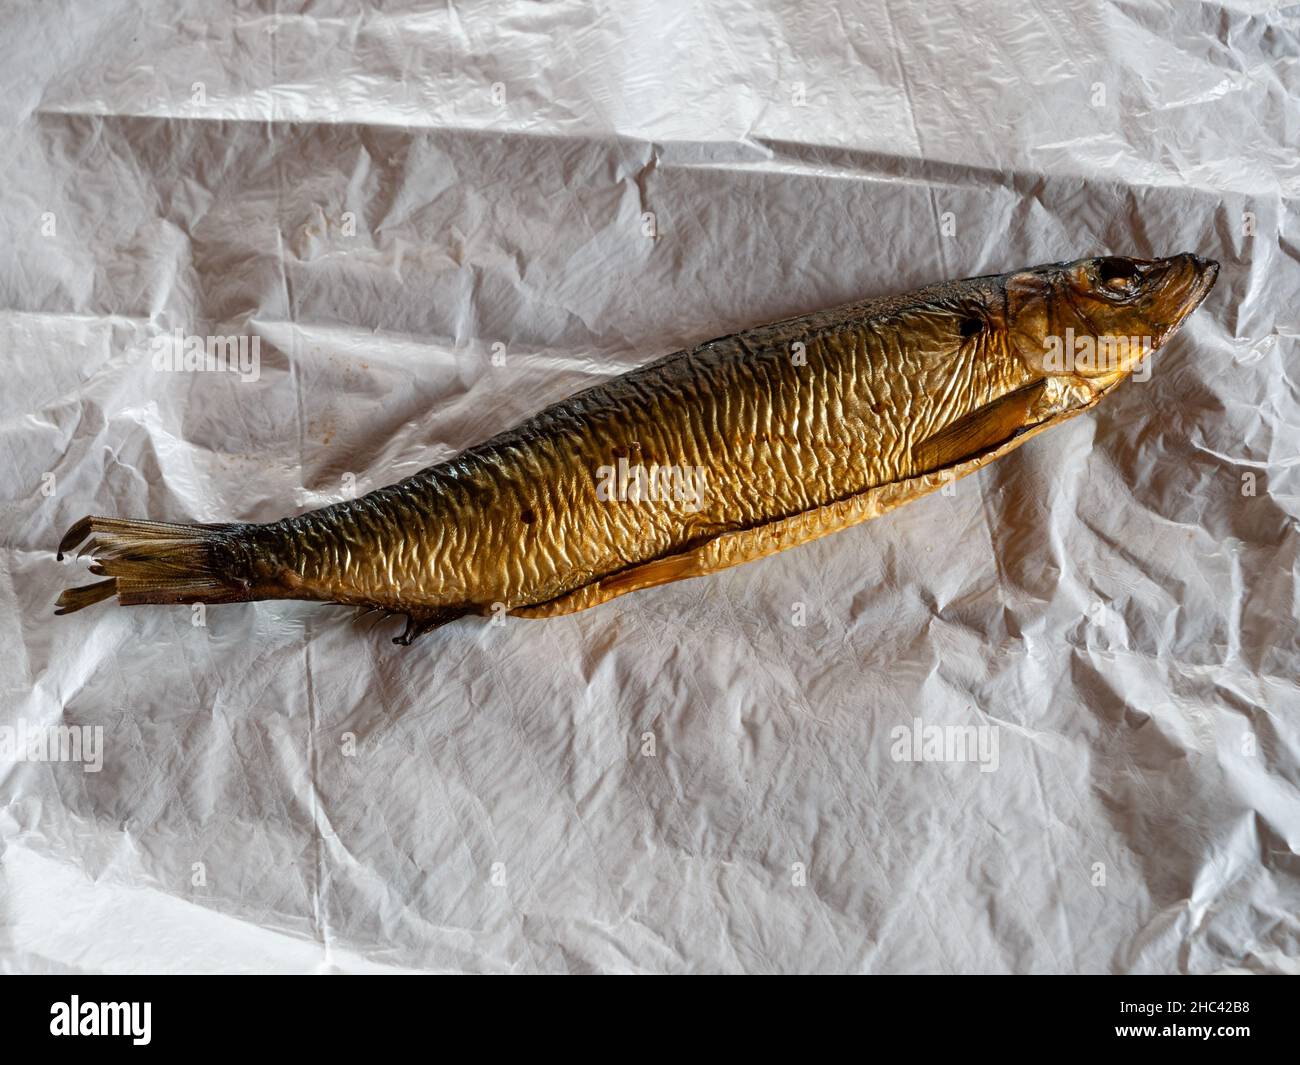 Kipper un intero aringa affumicata e curata o pesce salato su carta bianca Foto Stock